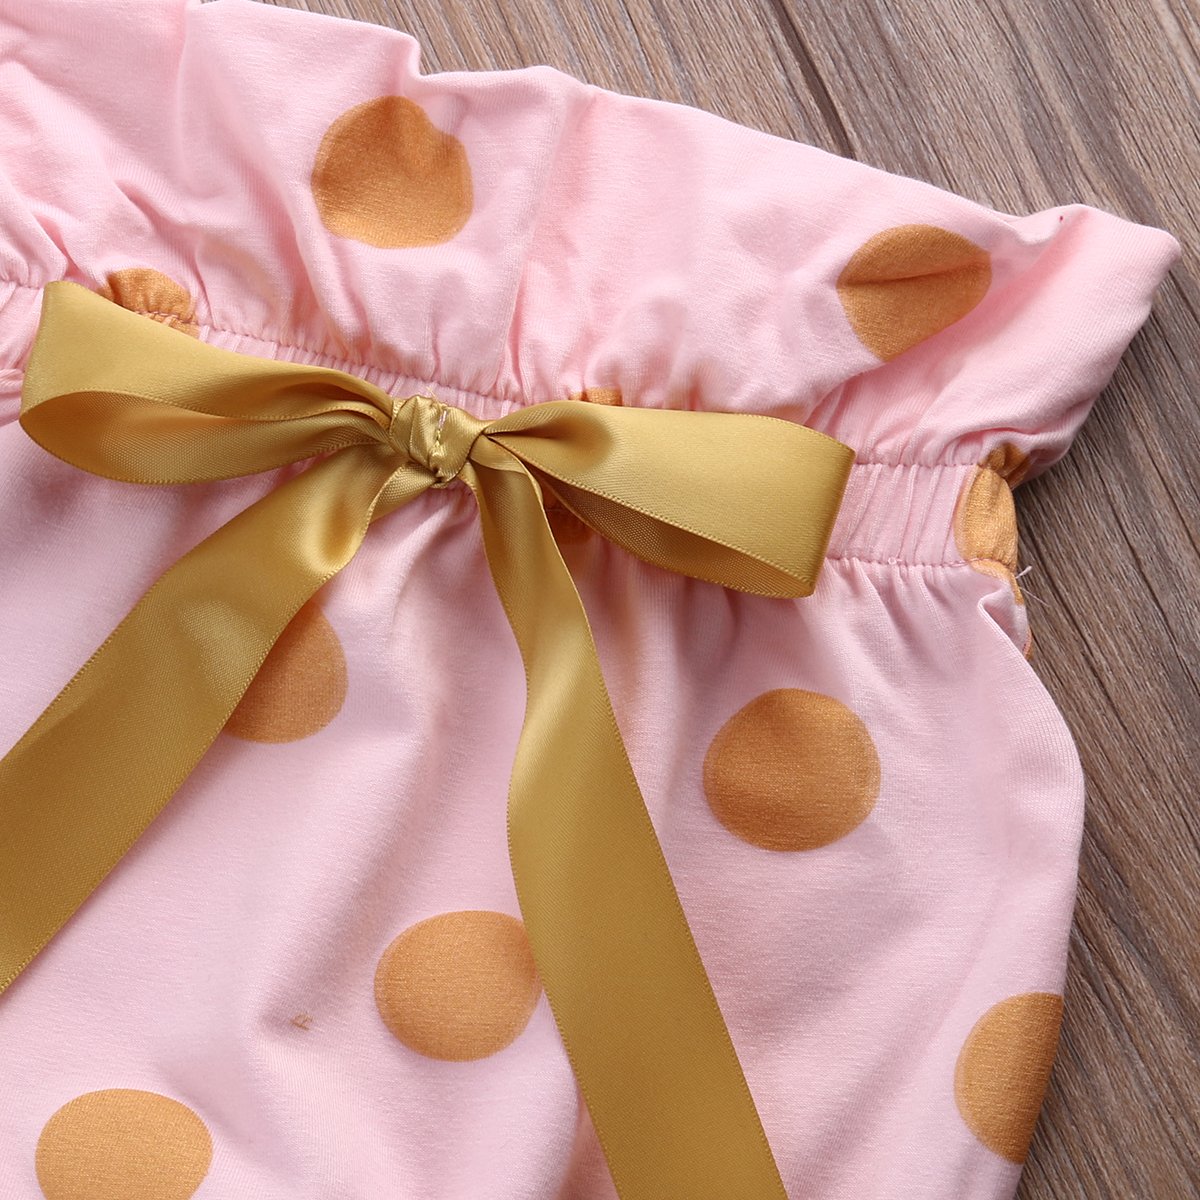 0-18M Newborn Baby Girls Clothing Set Short Sleeve Cotton Letter Romper Bodysuit + Floral Pants + Headband